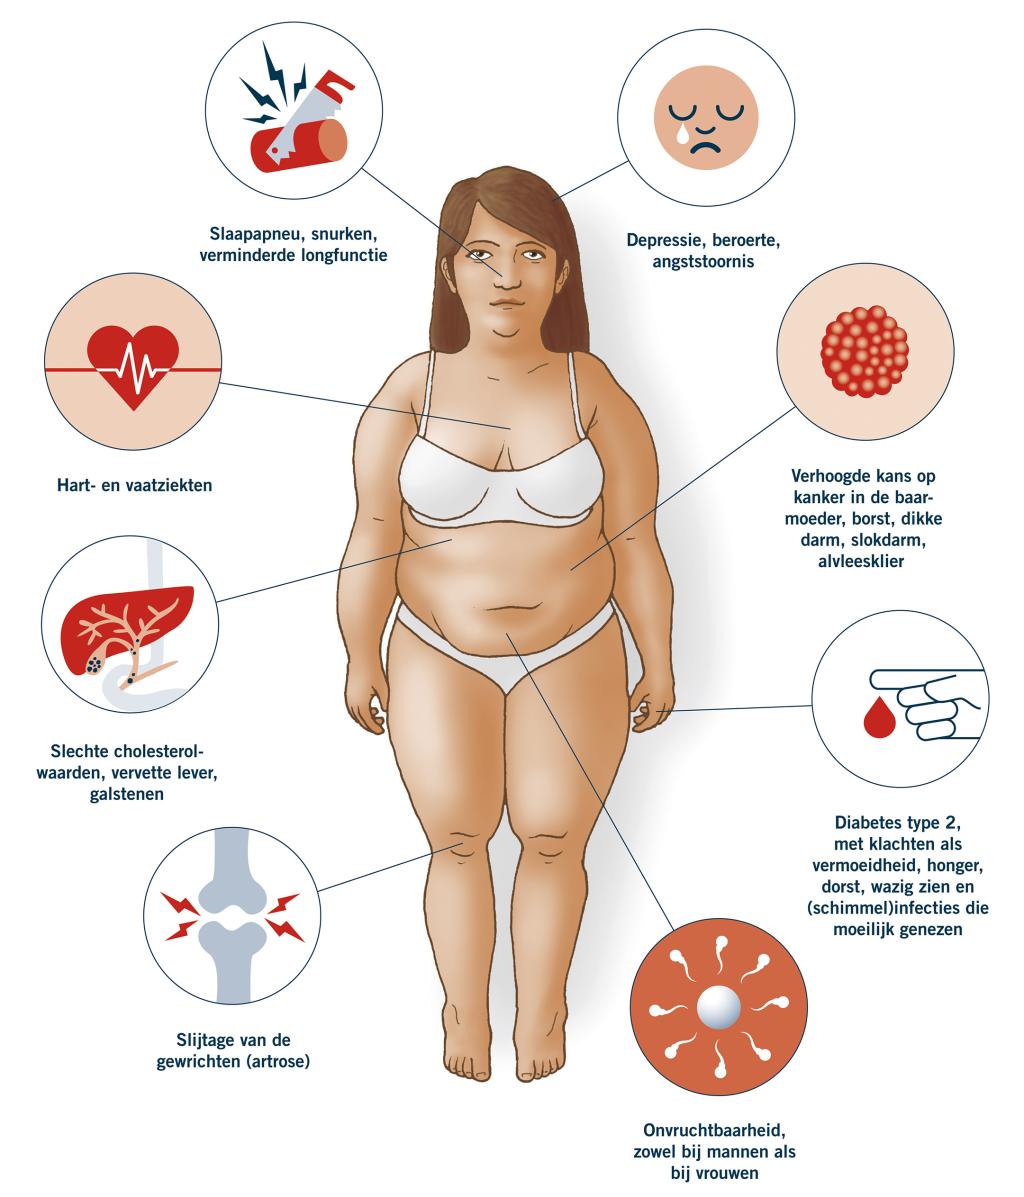 Obesitas illustratie gezondheidsrisico's